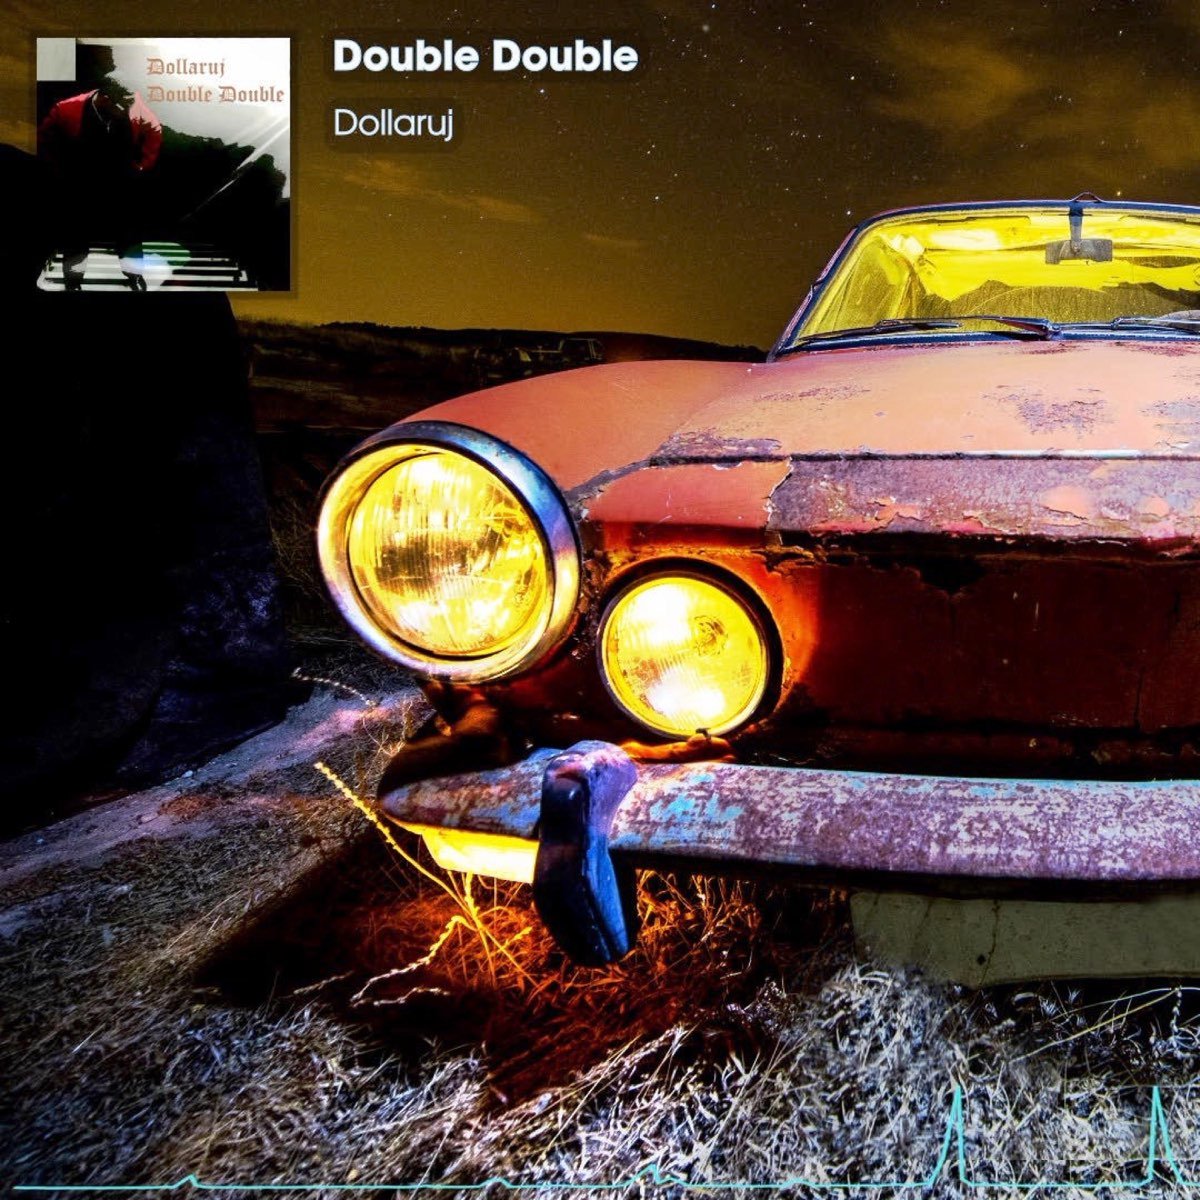 Dollaruj - Double Double